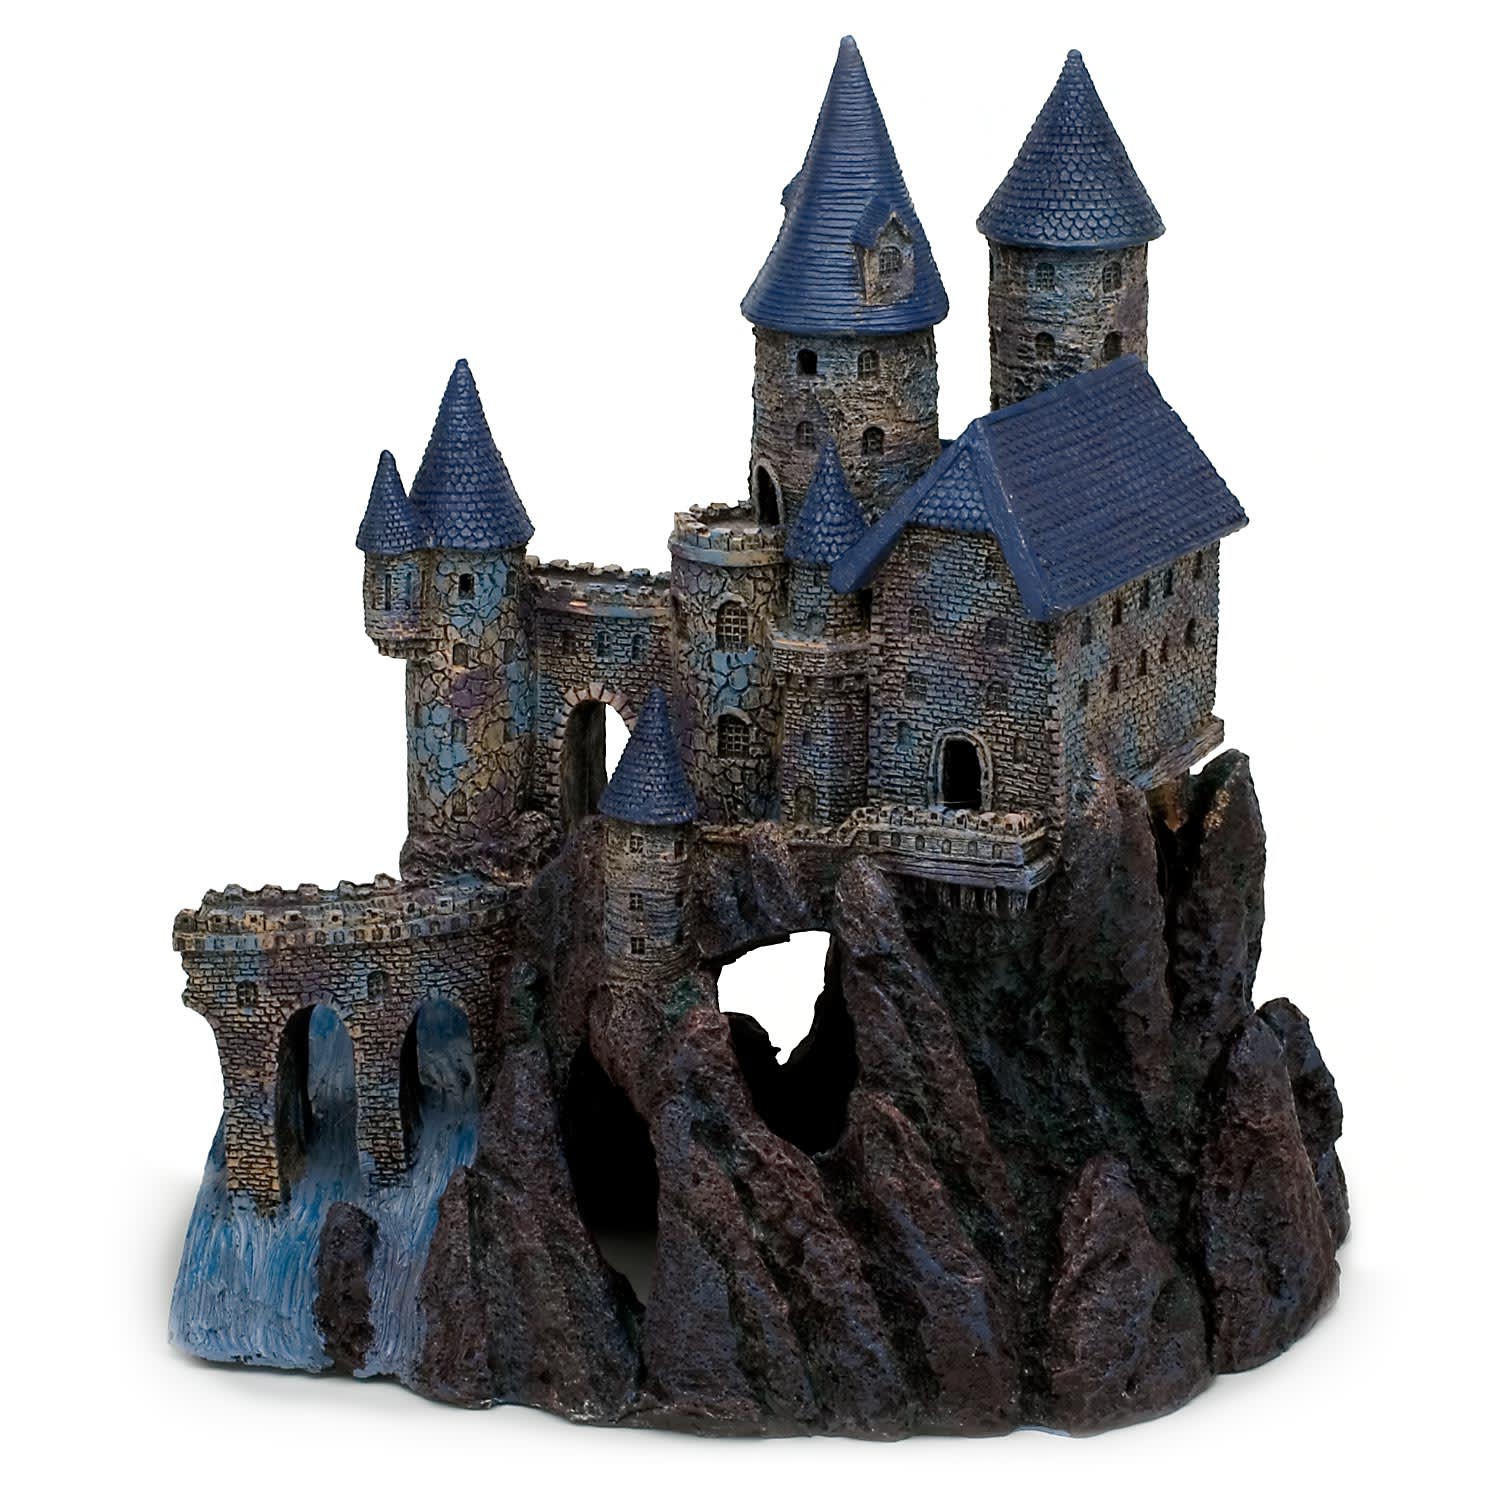 Penn Plax RRW5 Mini Fantasy Magical Castle Fish Aquarium Ornament 4" Tall 